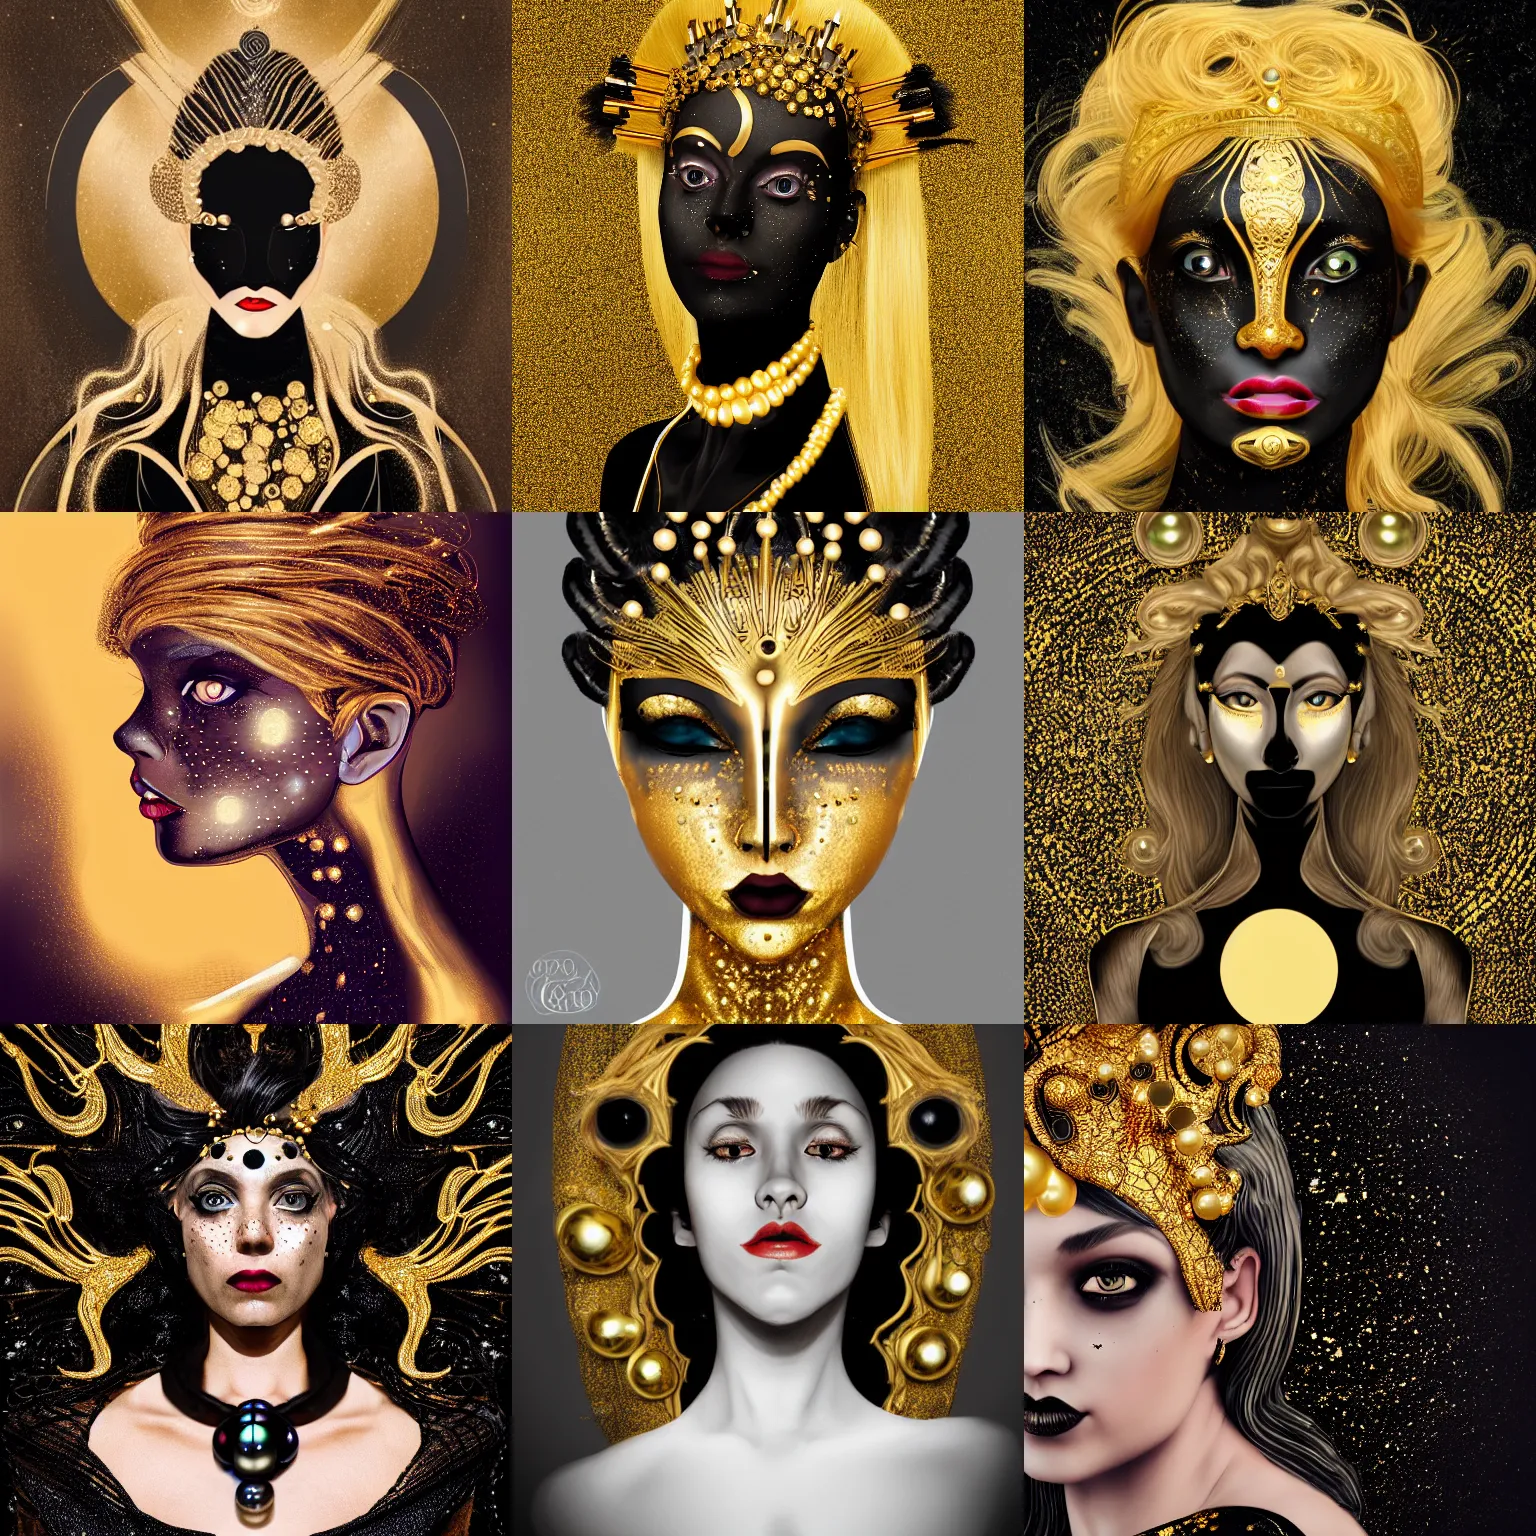 Prompt: Gold girl with gold hair in black dress, black art nouveau style headdress, black pearls, black gems, glowing eyes, light freckles, portrait, biomech, concept art, medium shot, unreal, octane, symmetrical, photorealism